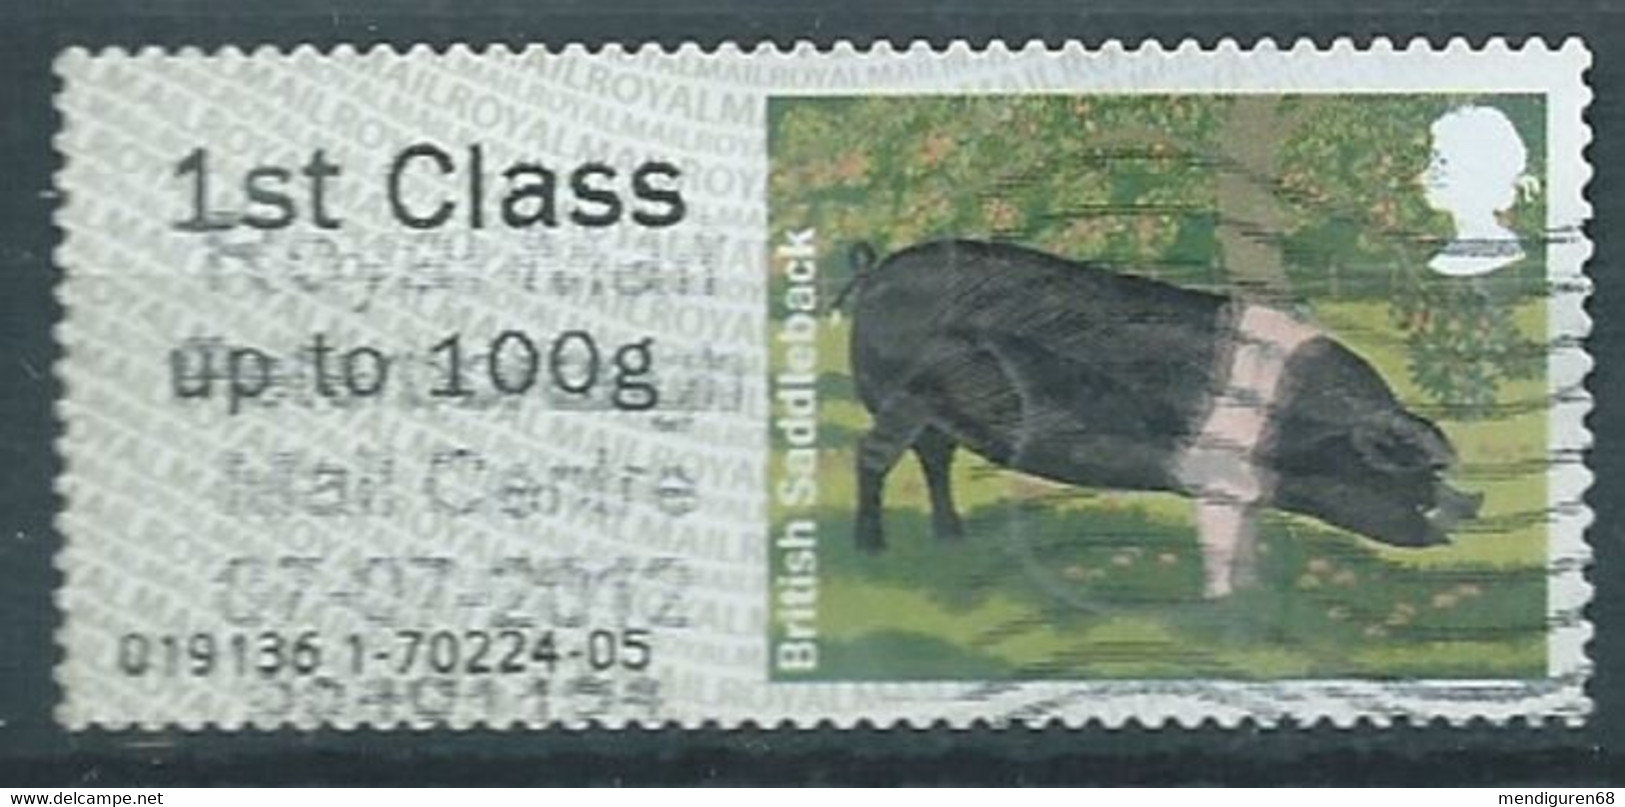 GROSBRITANNIEN GRANDE BRETAGNE GB 2012 POST&GO PIGS: SADDLEBACK 1st CLASS Up To 100g USED SG FS38 MI ATM38 YT TD38 - Post & Go Stamps